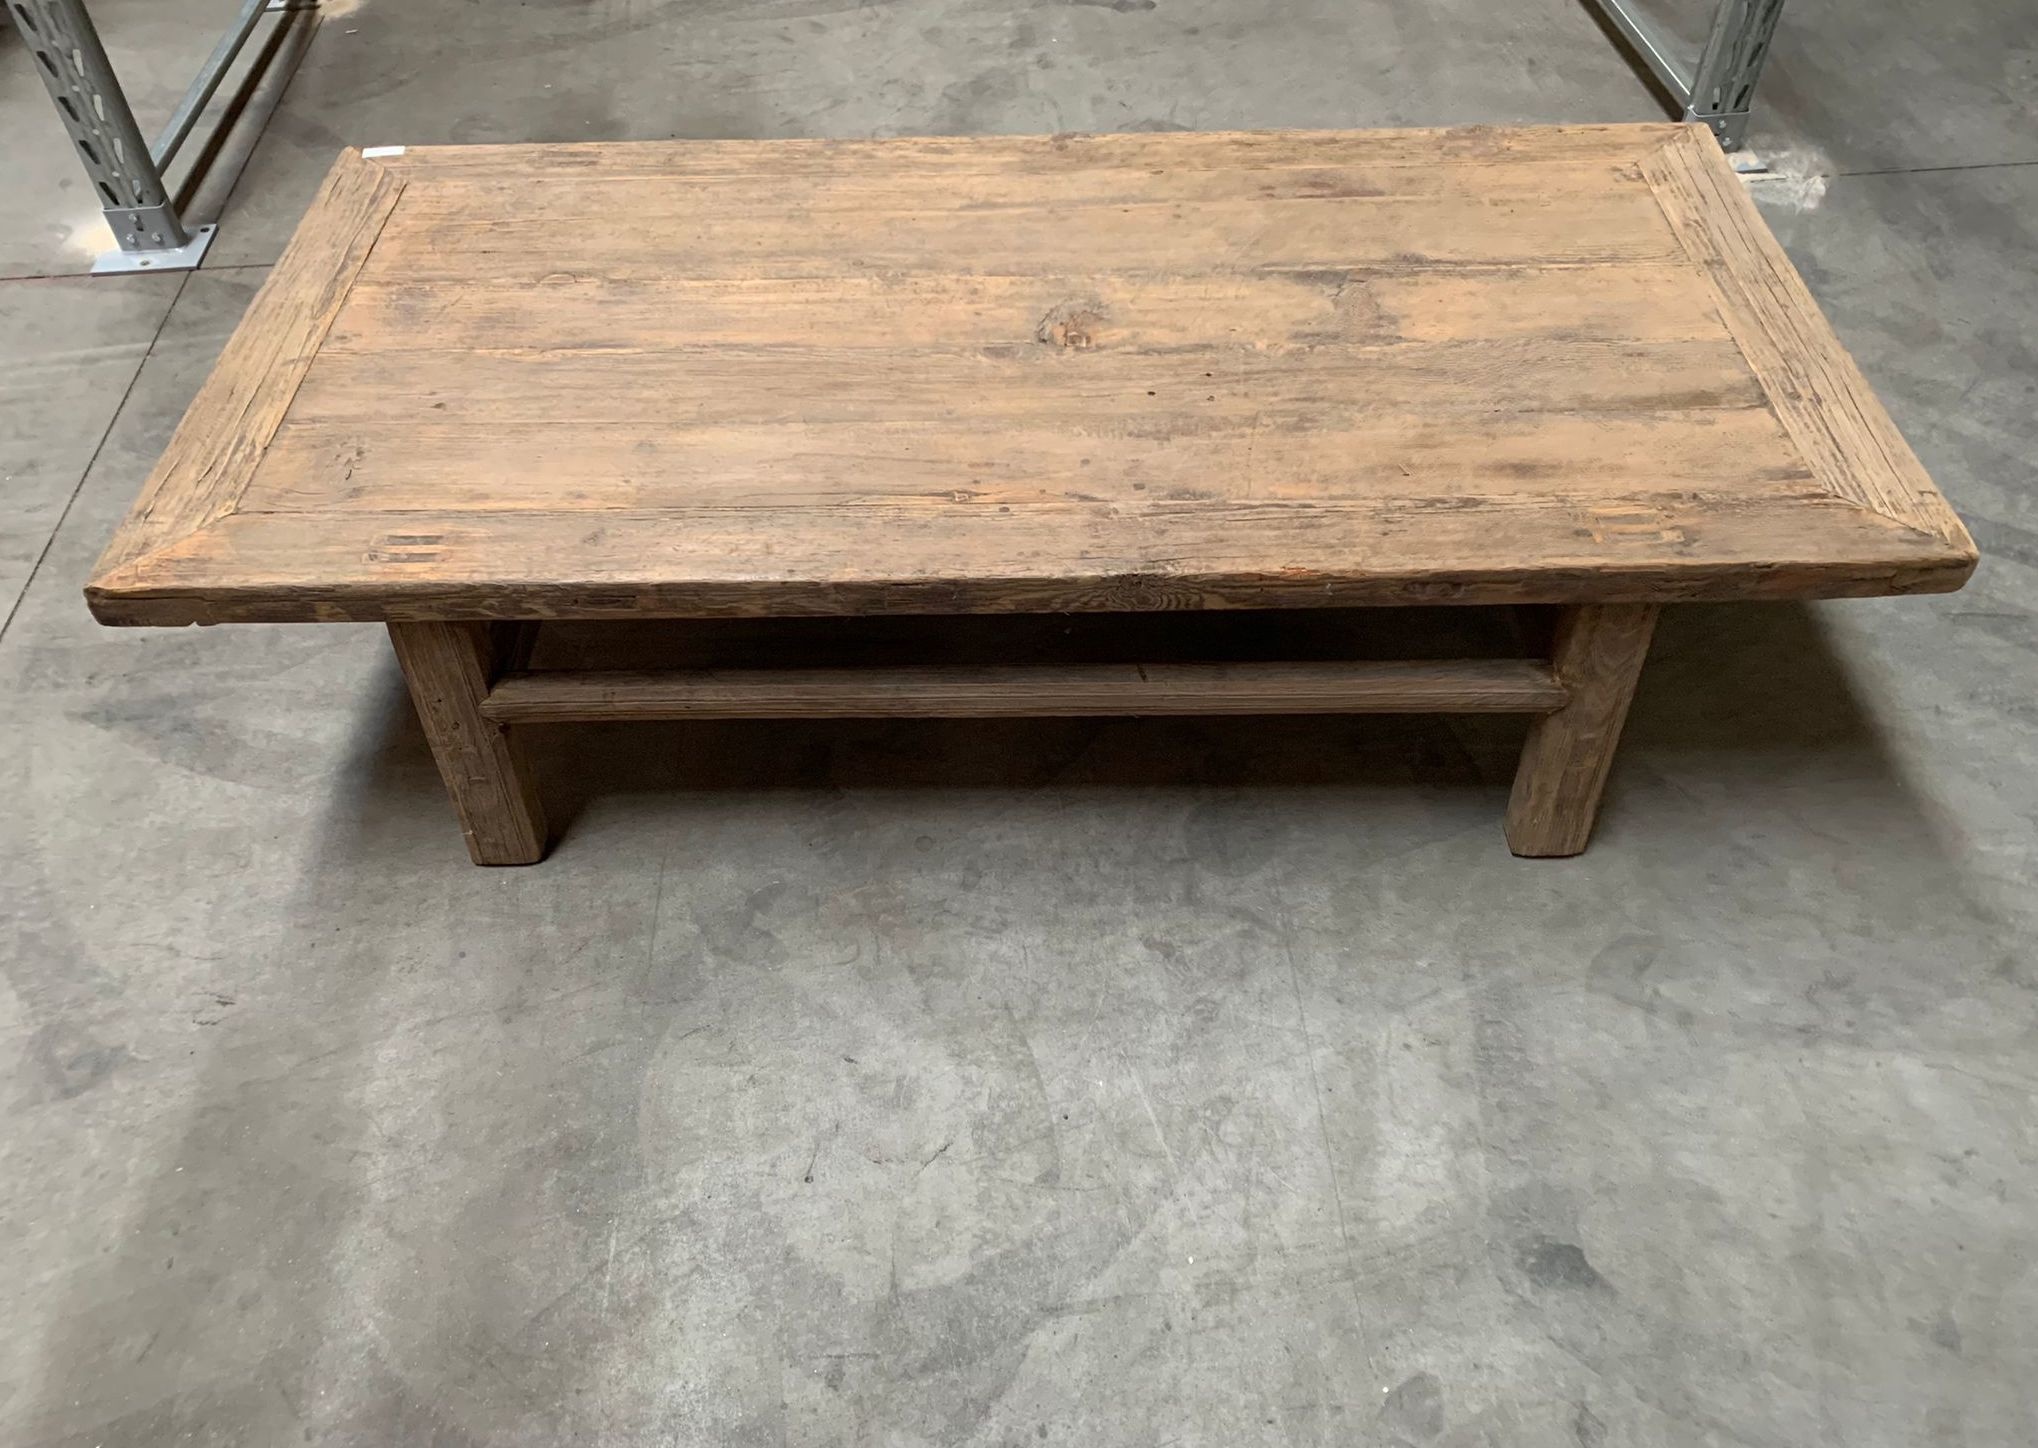 Maisons Origines Vintage raw wood coffee table - 180X86X46cm